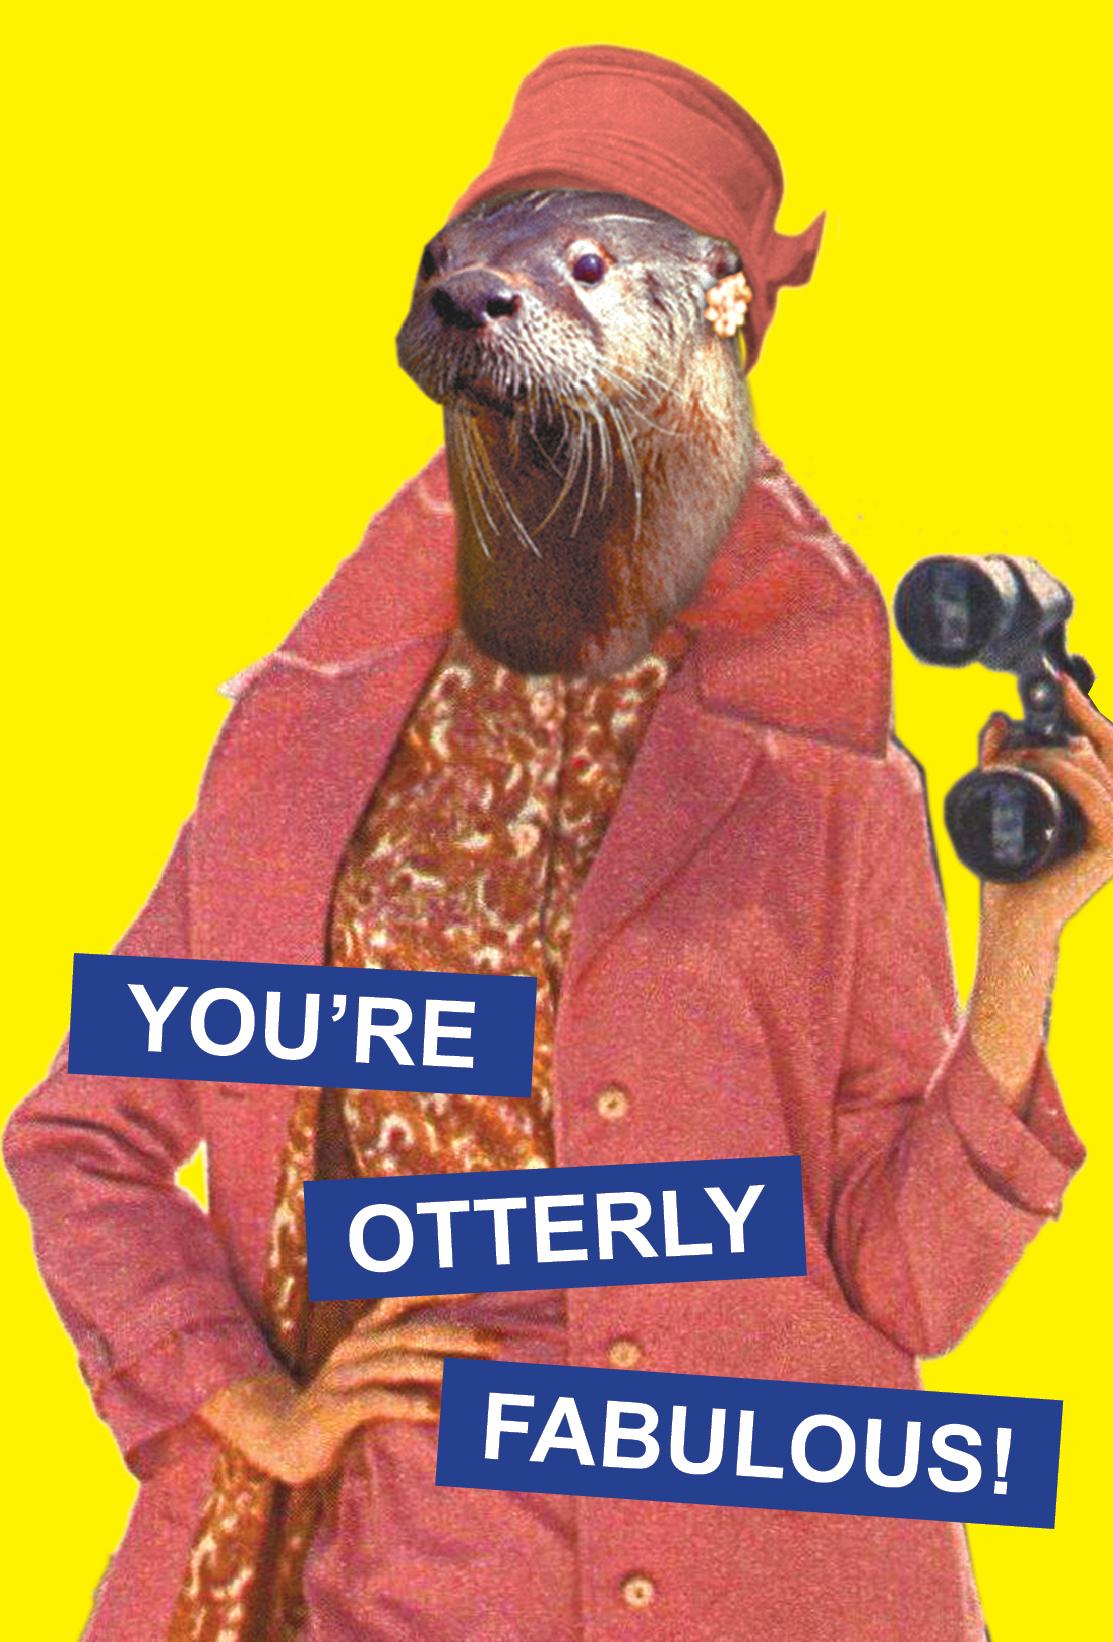 You're otterly fabulous!